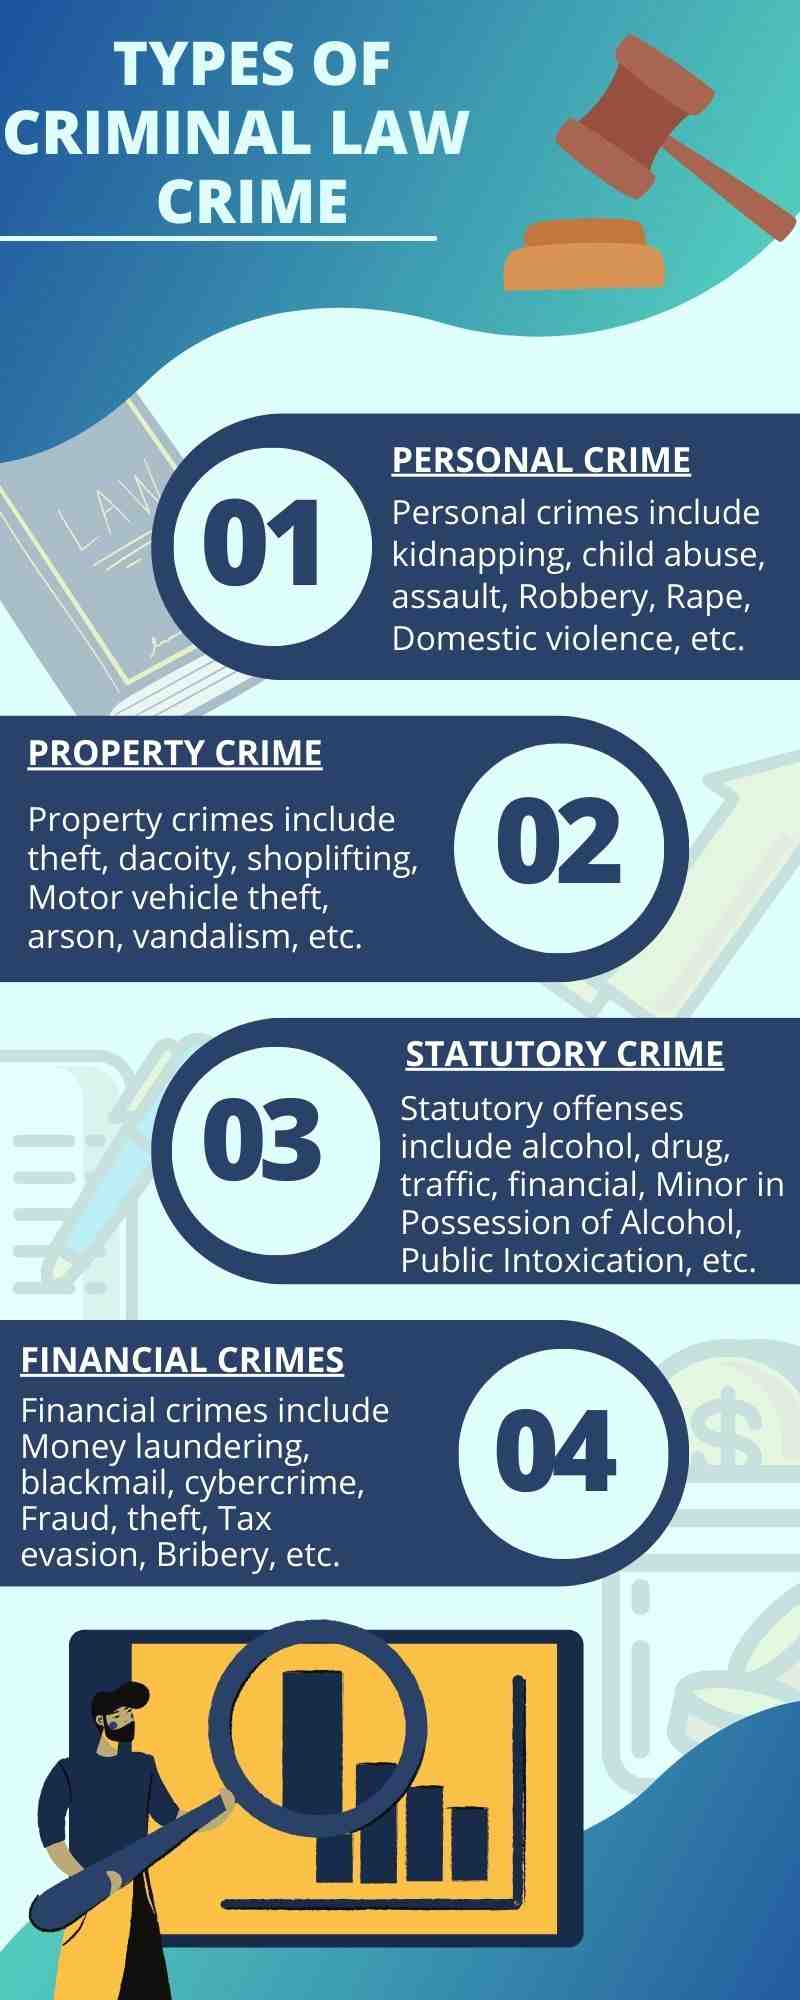 Types of Criminal Law